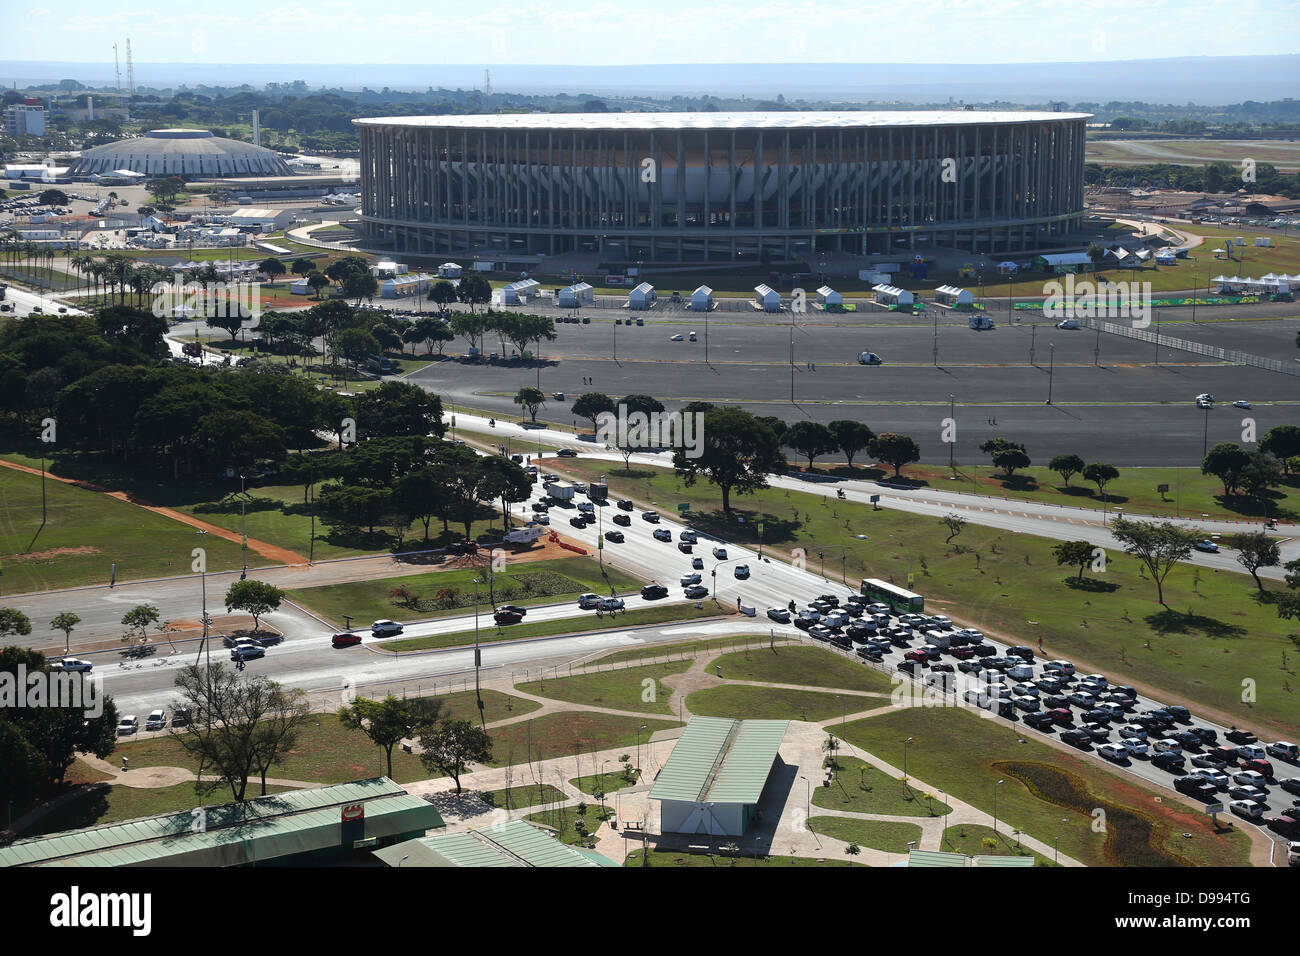 Estadio Nacional de Brasilia Mane Garrincha in Brasilia, Brazil FIFA World Cup Football Stadium 2014 Stock Photo